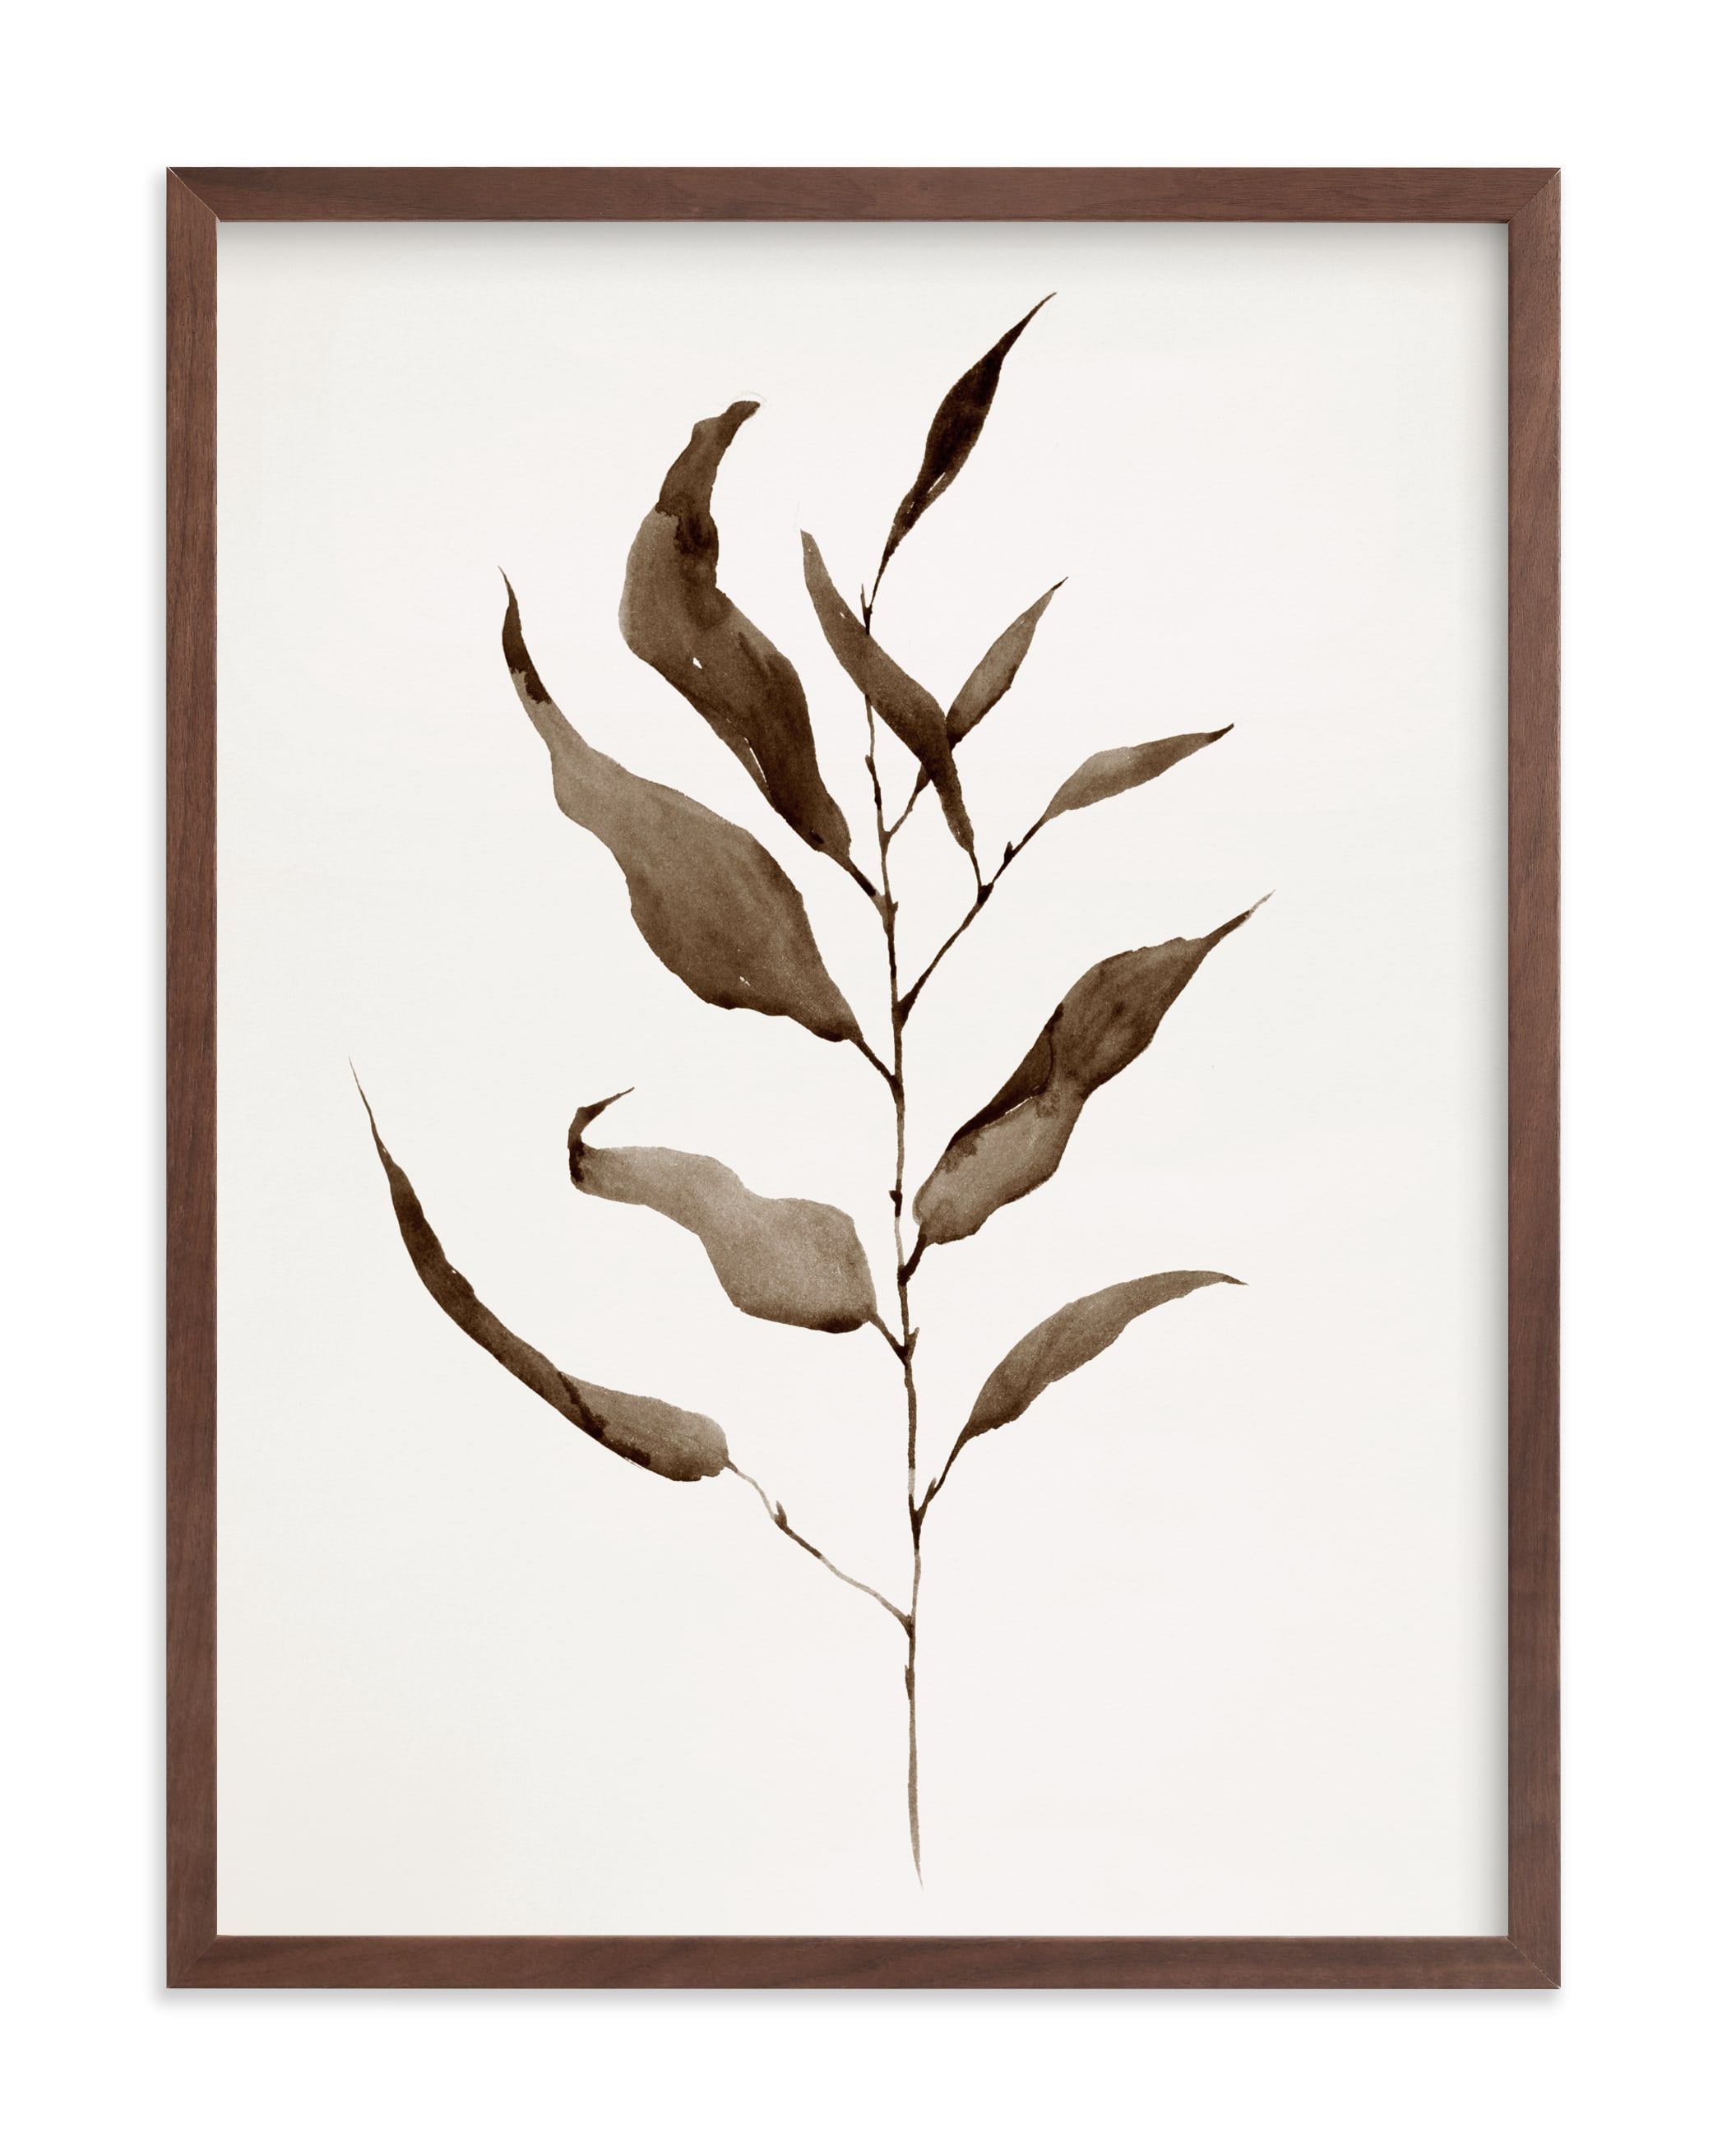 "Eucalyptus Foliage" - Painting Limited Edition Art Print by jinseikou. | Minted